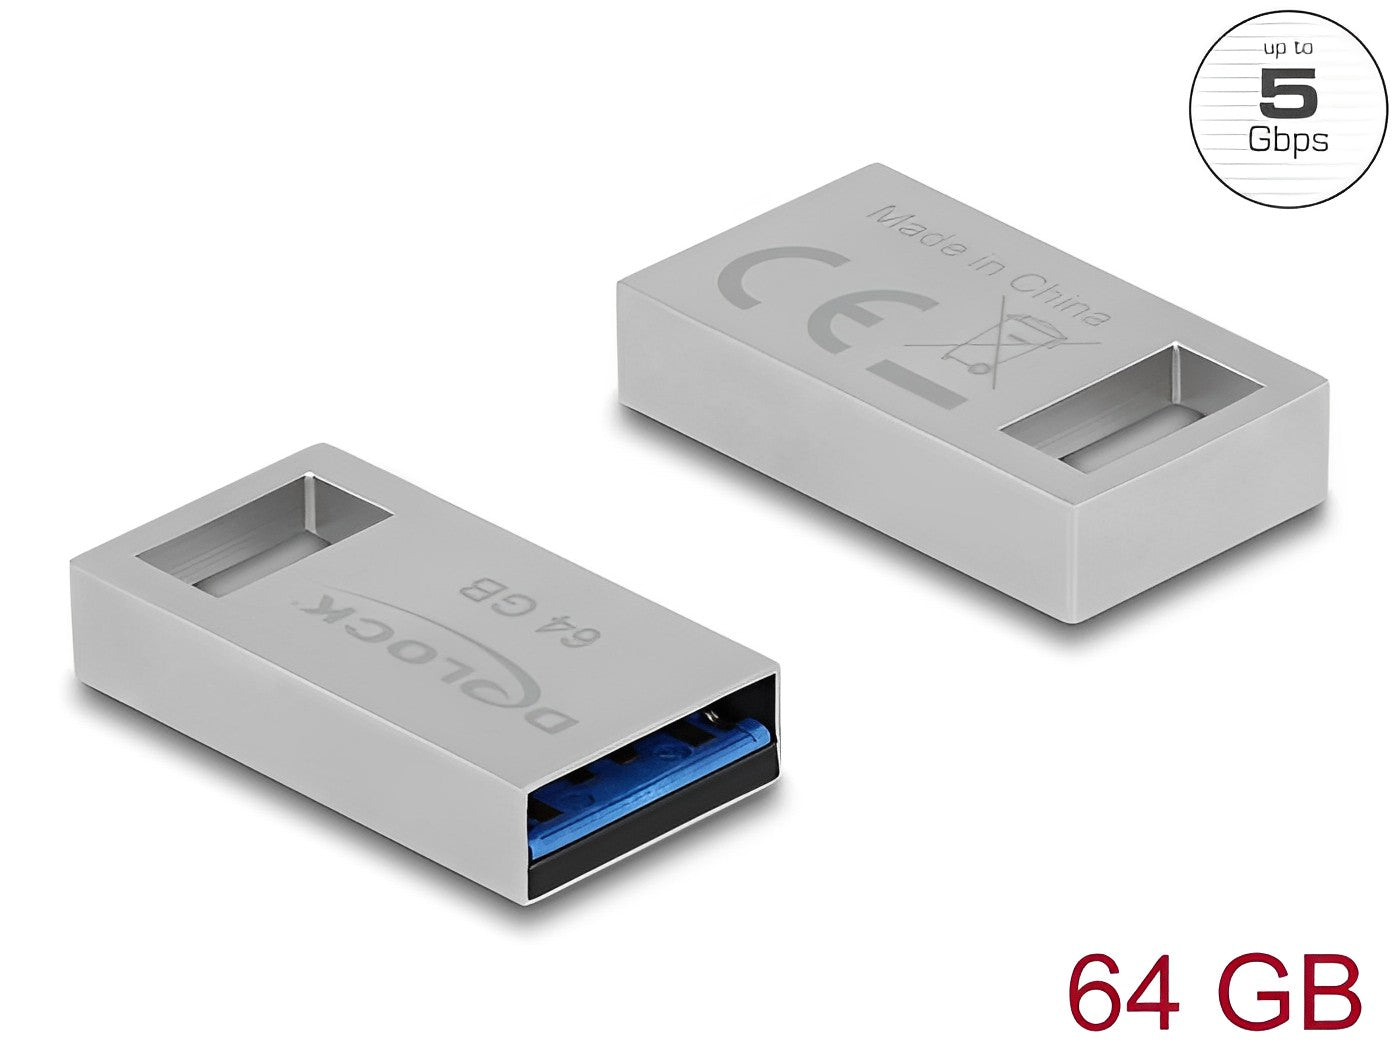 זיכרון נייד USB 5 Gbps נפח 64GB - delock.israel